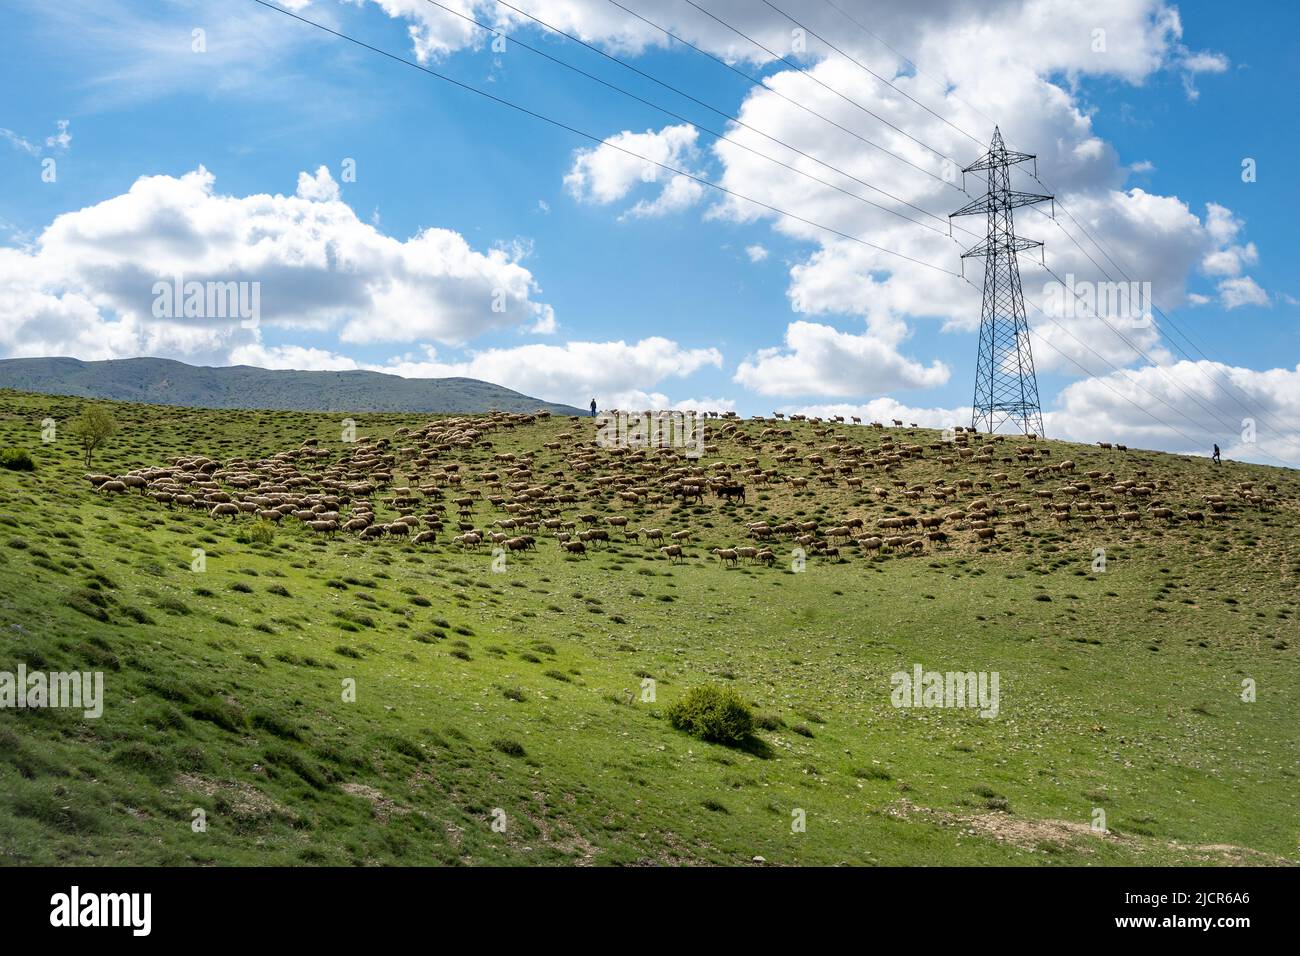 Shepards drive a flock of sheep on the green pasture near Gaziantep, Türkiye. Stock Photo